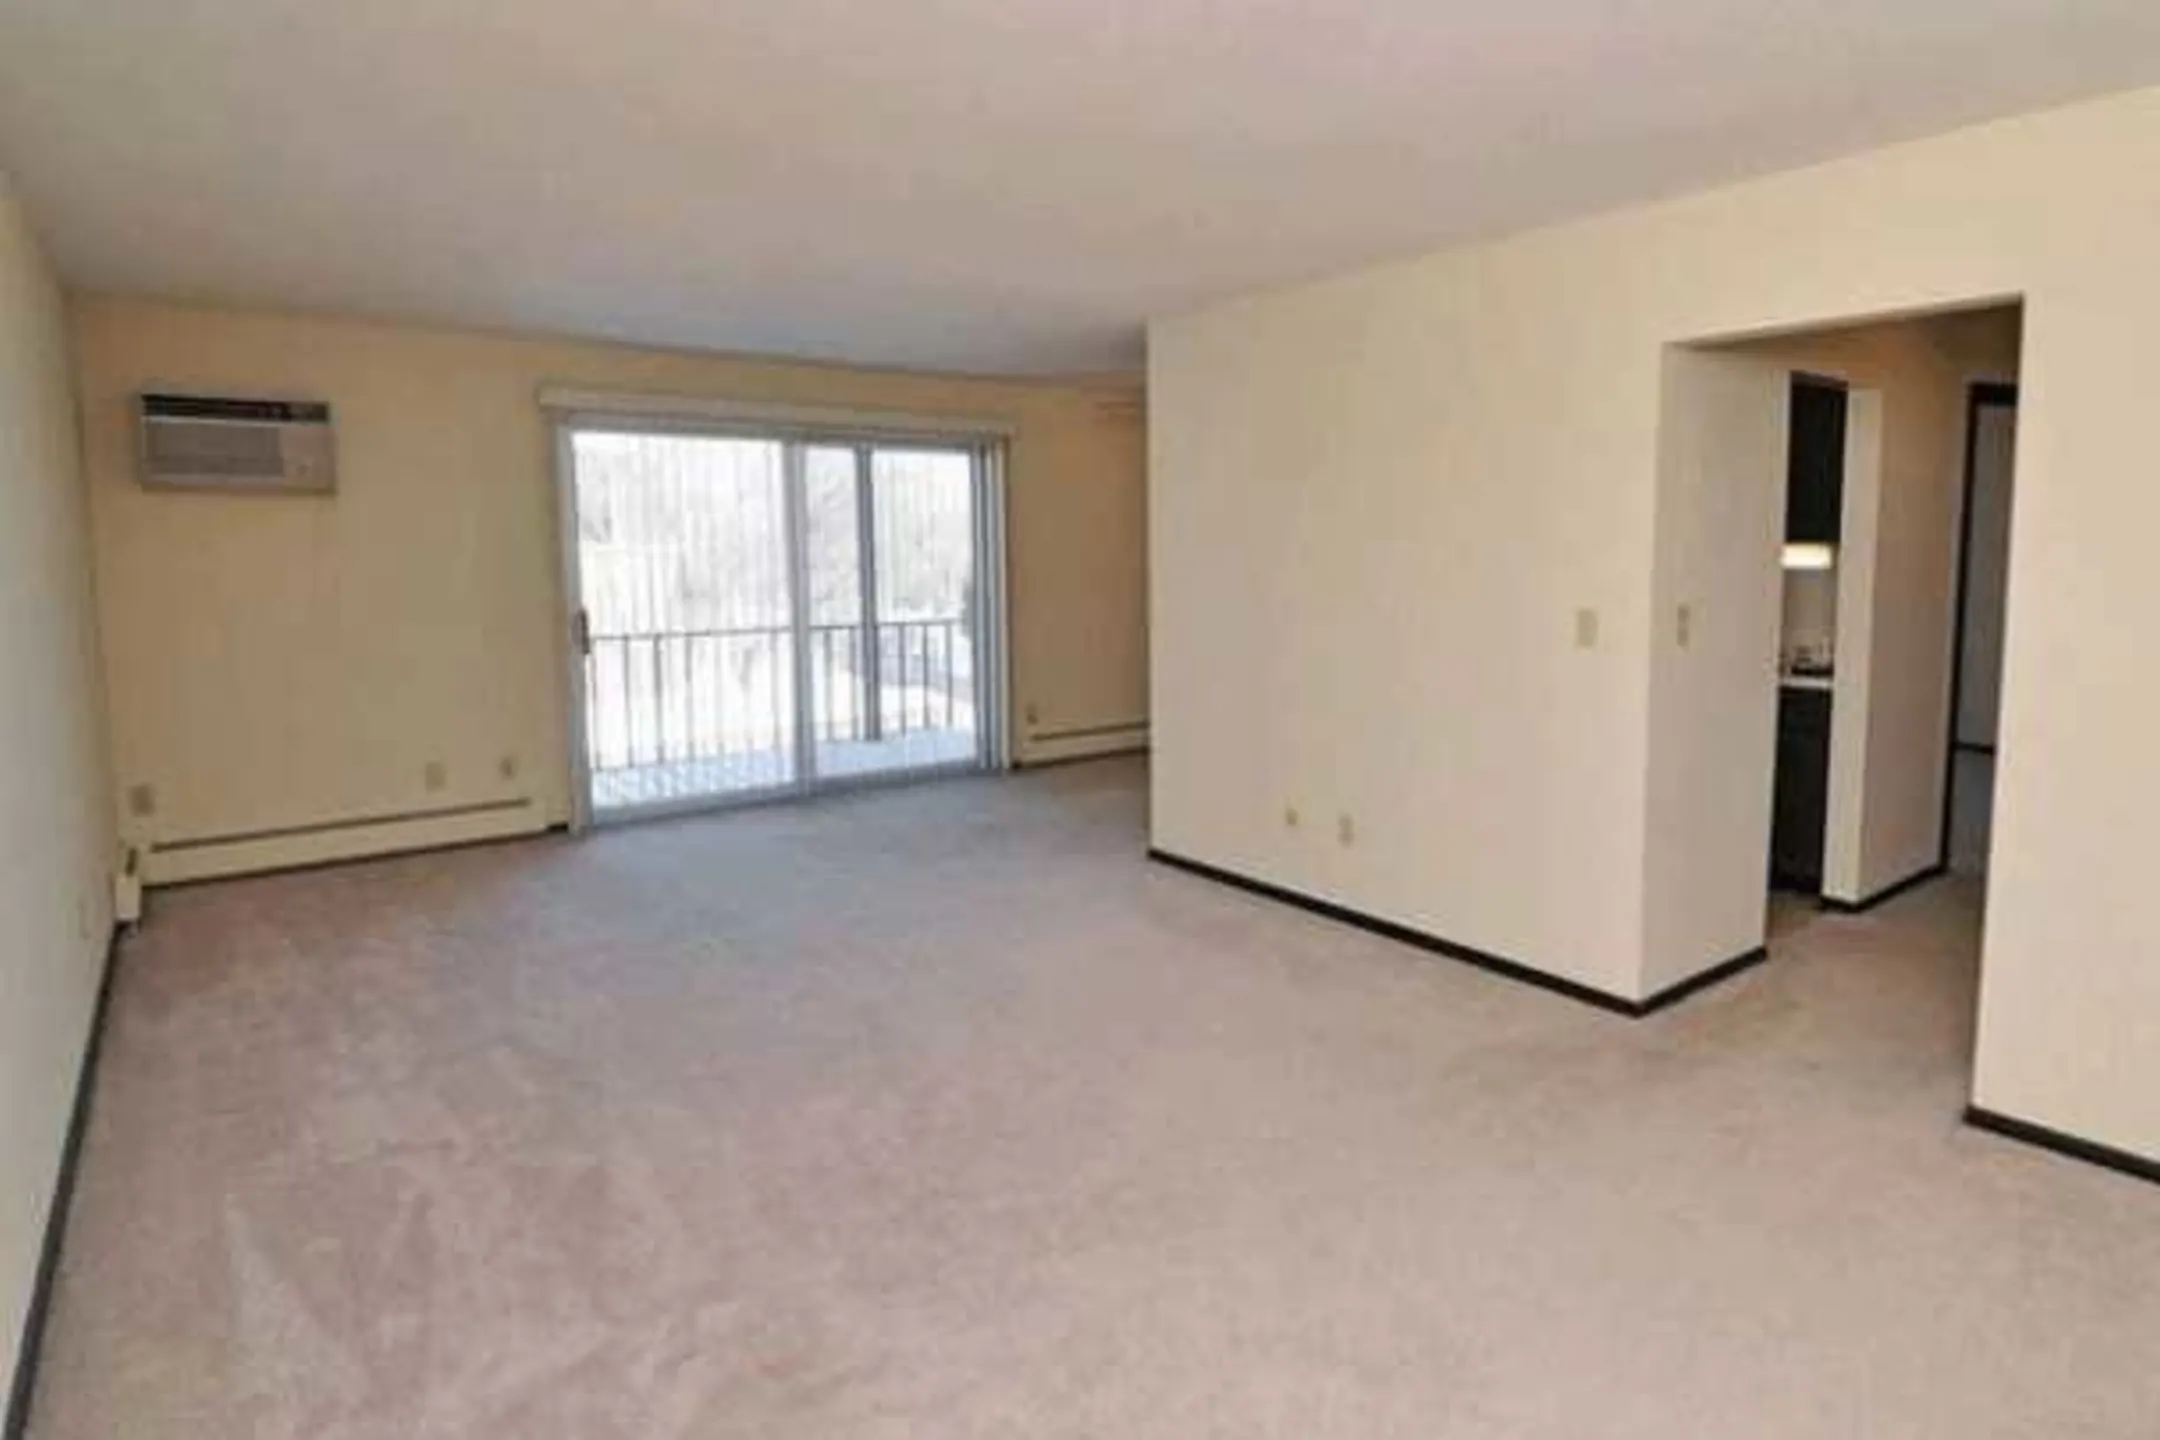 Living Room - Wentworth Apartments - Saint Paul, MN